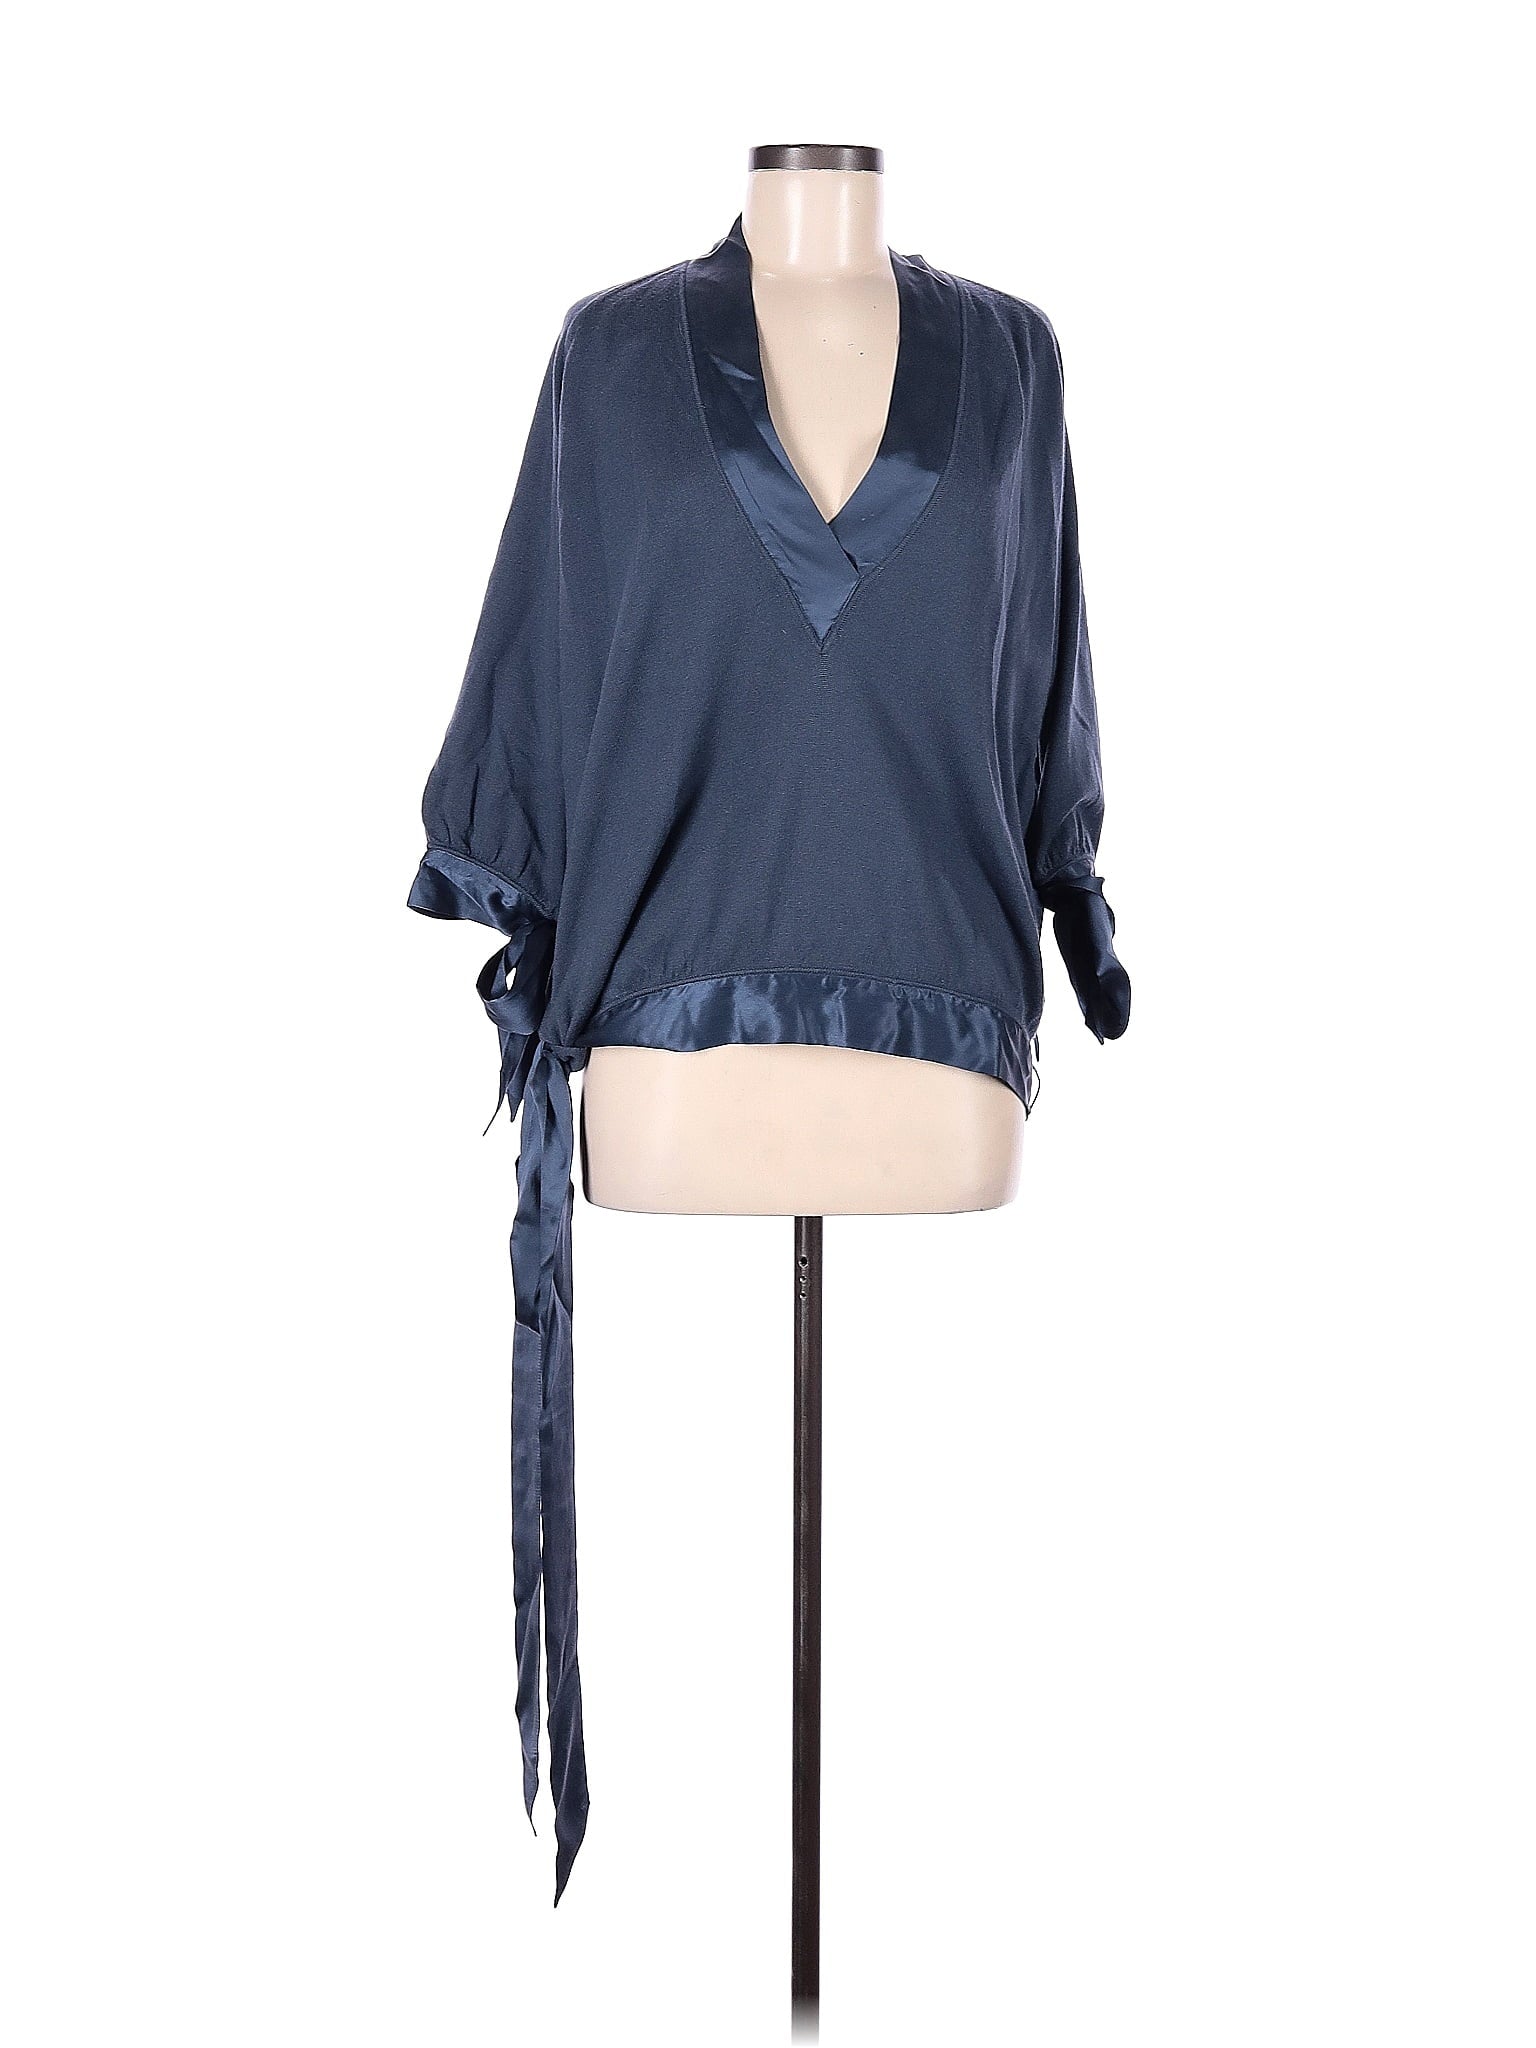 Stella Mc Cartney For H&M Silk Pullover Sweater size - M